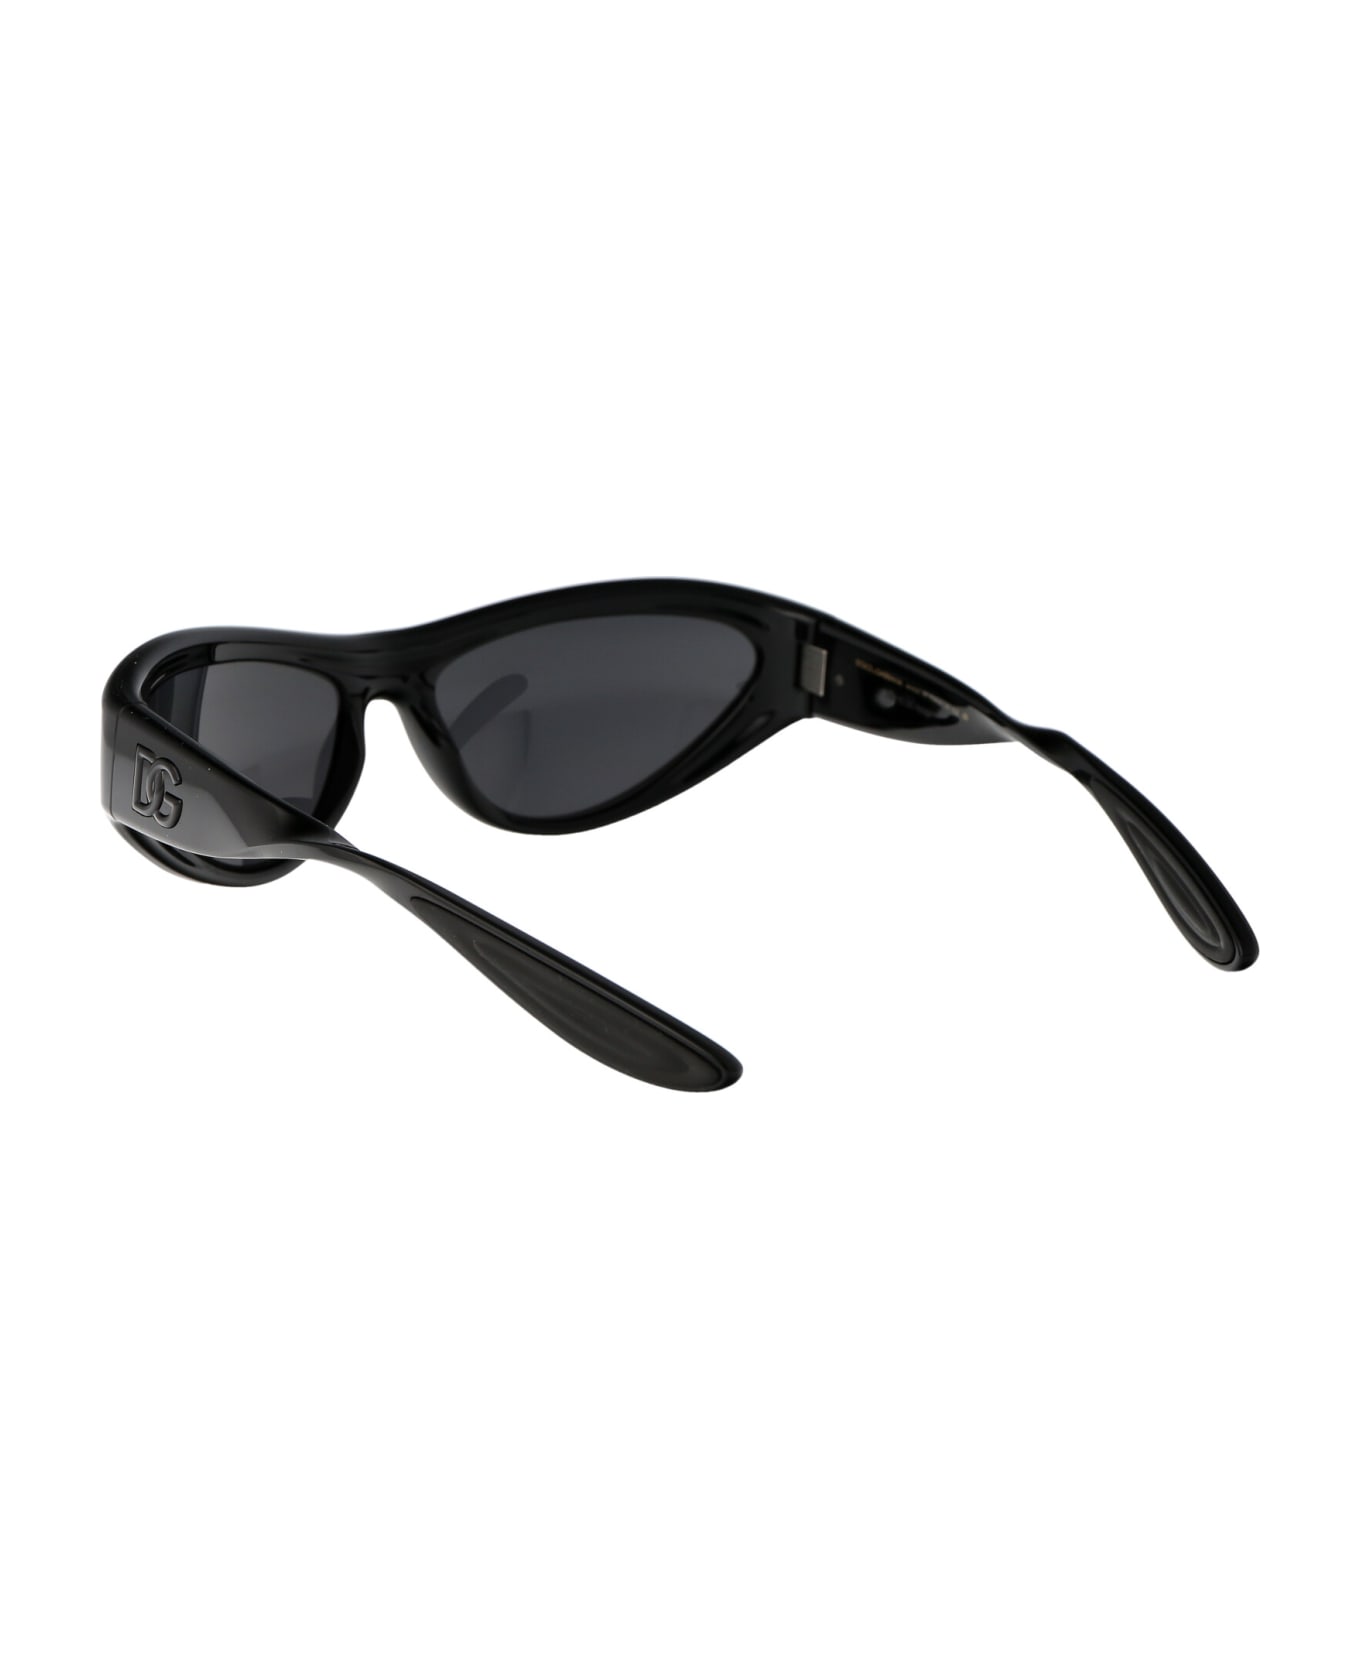 Dolce & Gabbana Eyewear 0dg6190 Sunglasses - 501/87 BLACK